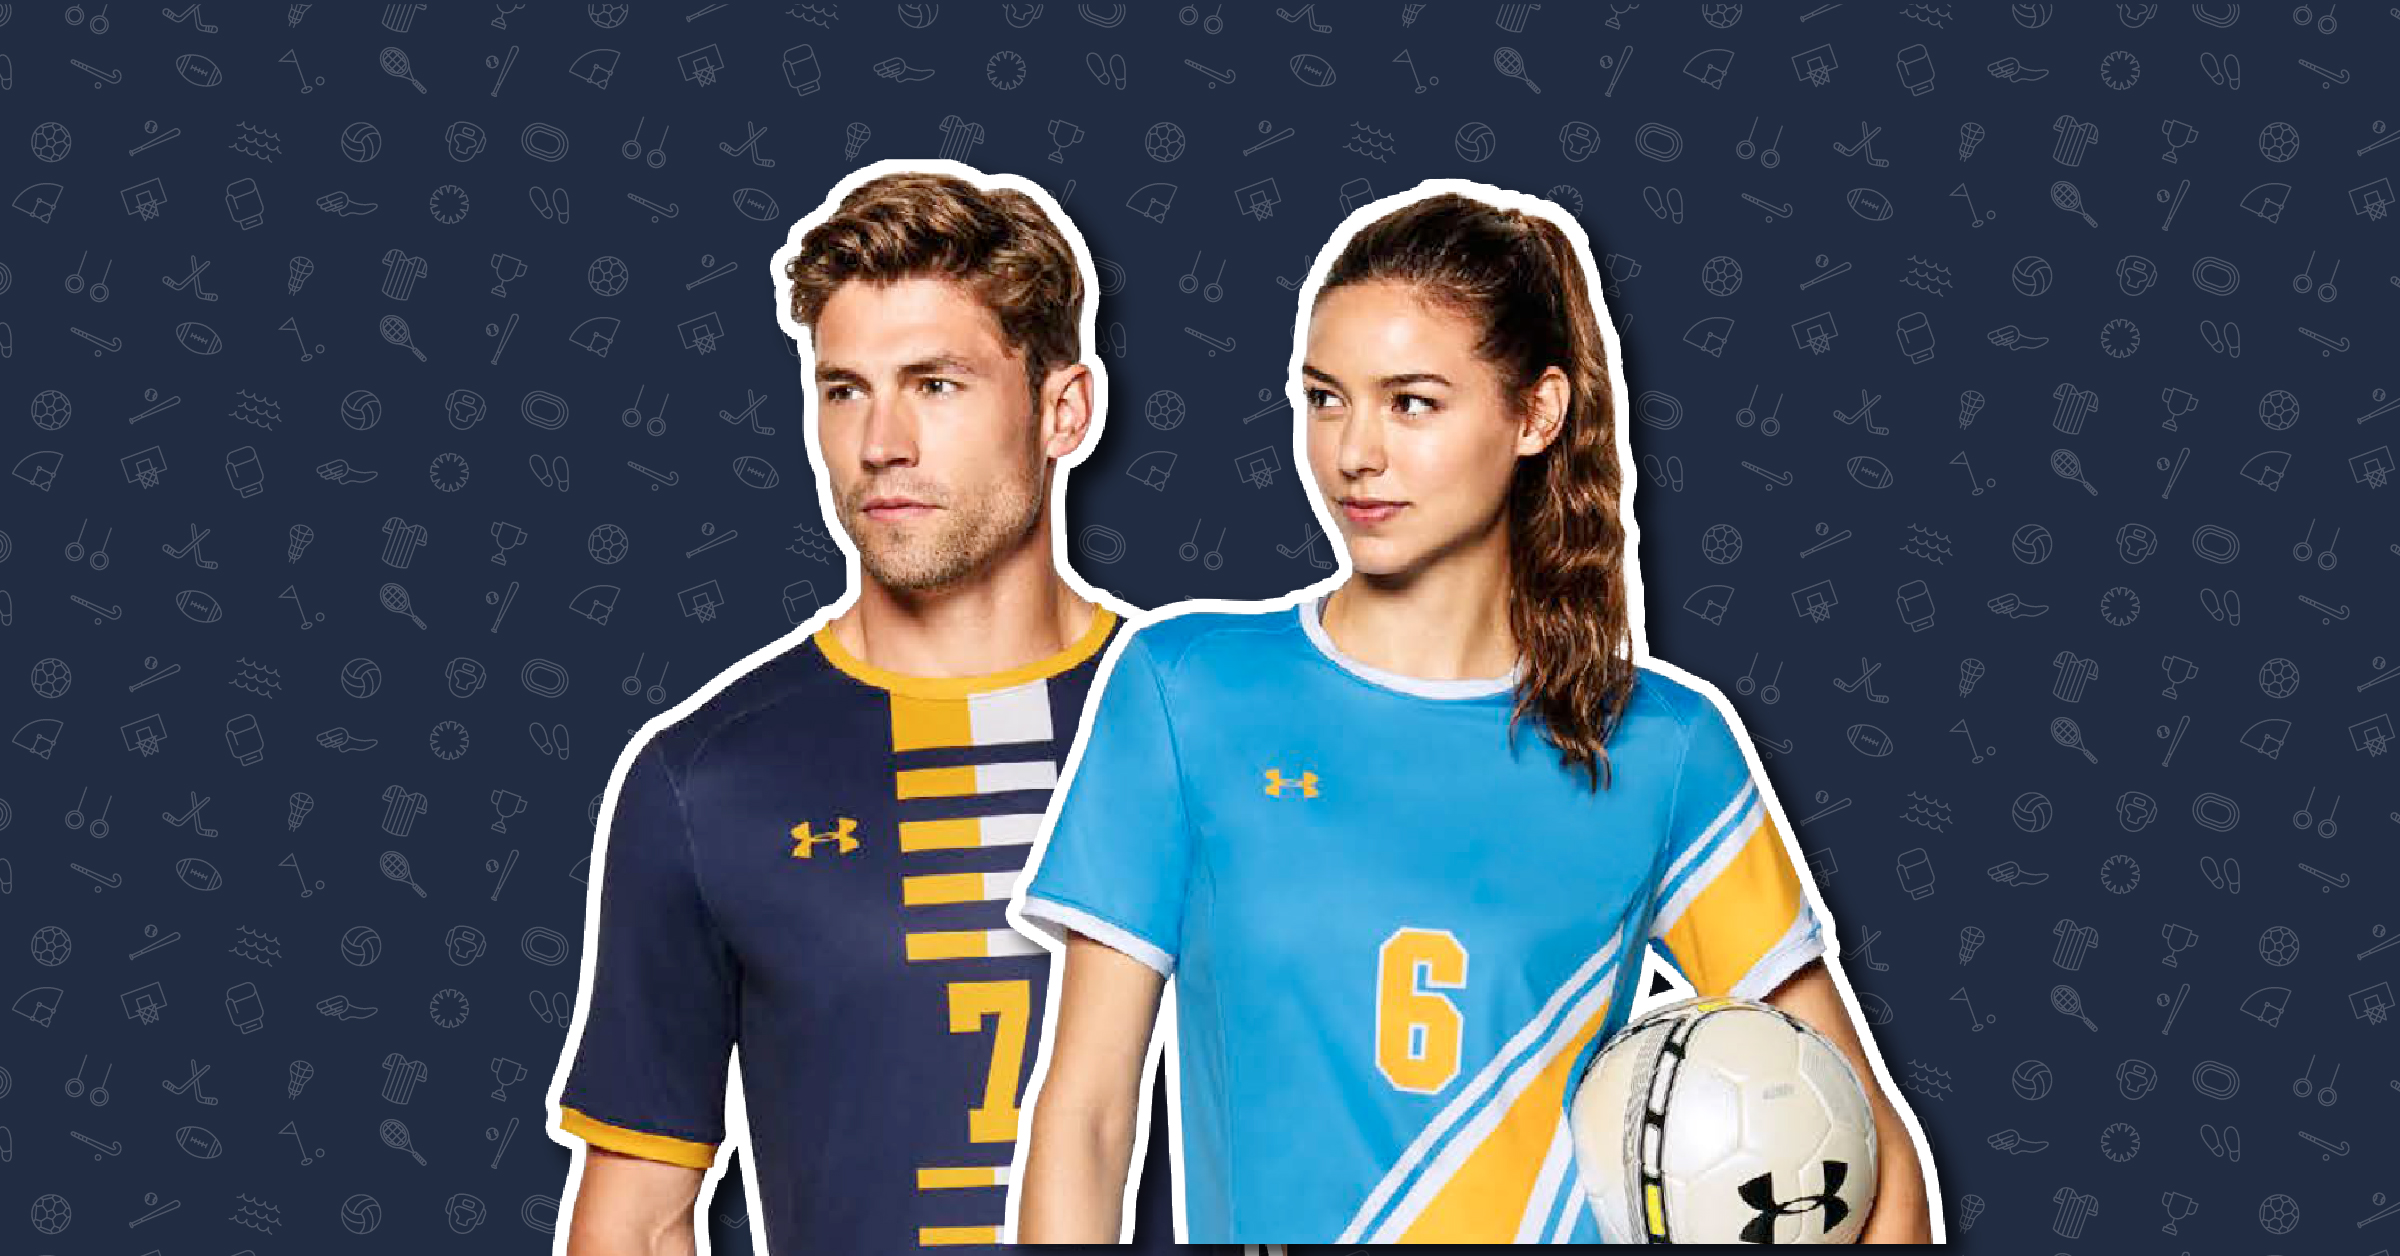 Soccer uniforms online